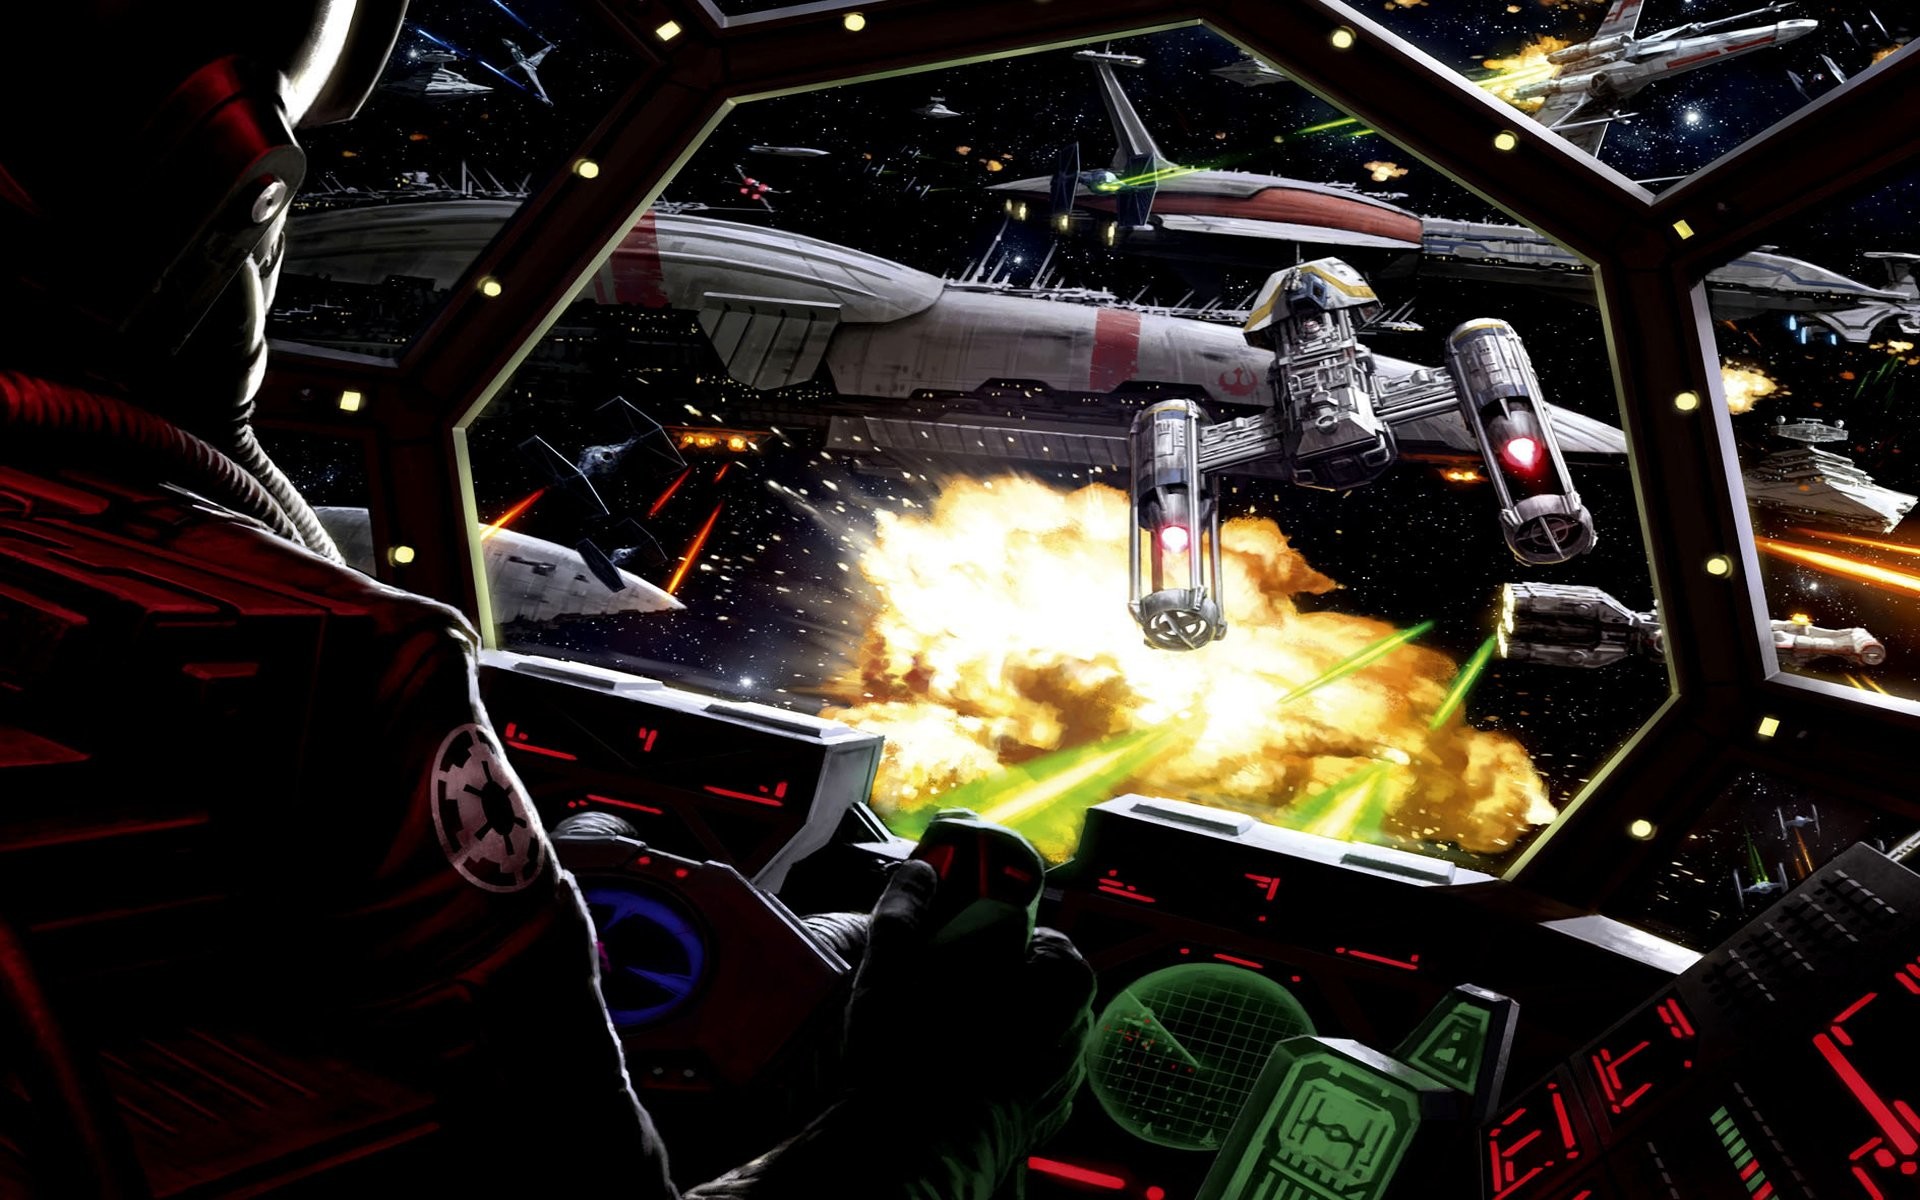 TIE FIGHTER star wars futuristic spaceship space sci fi wallpaper 811259 WallpaperUP